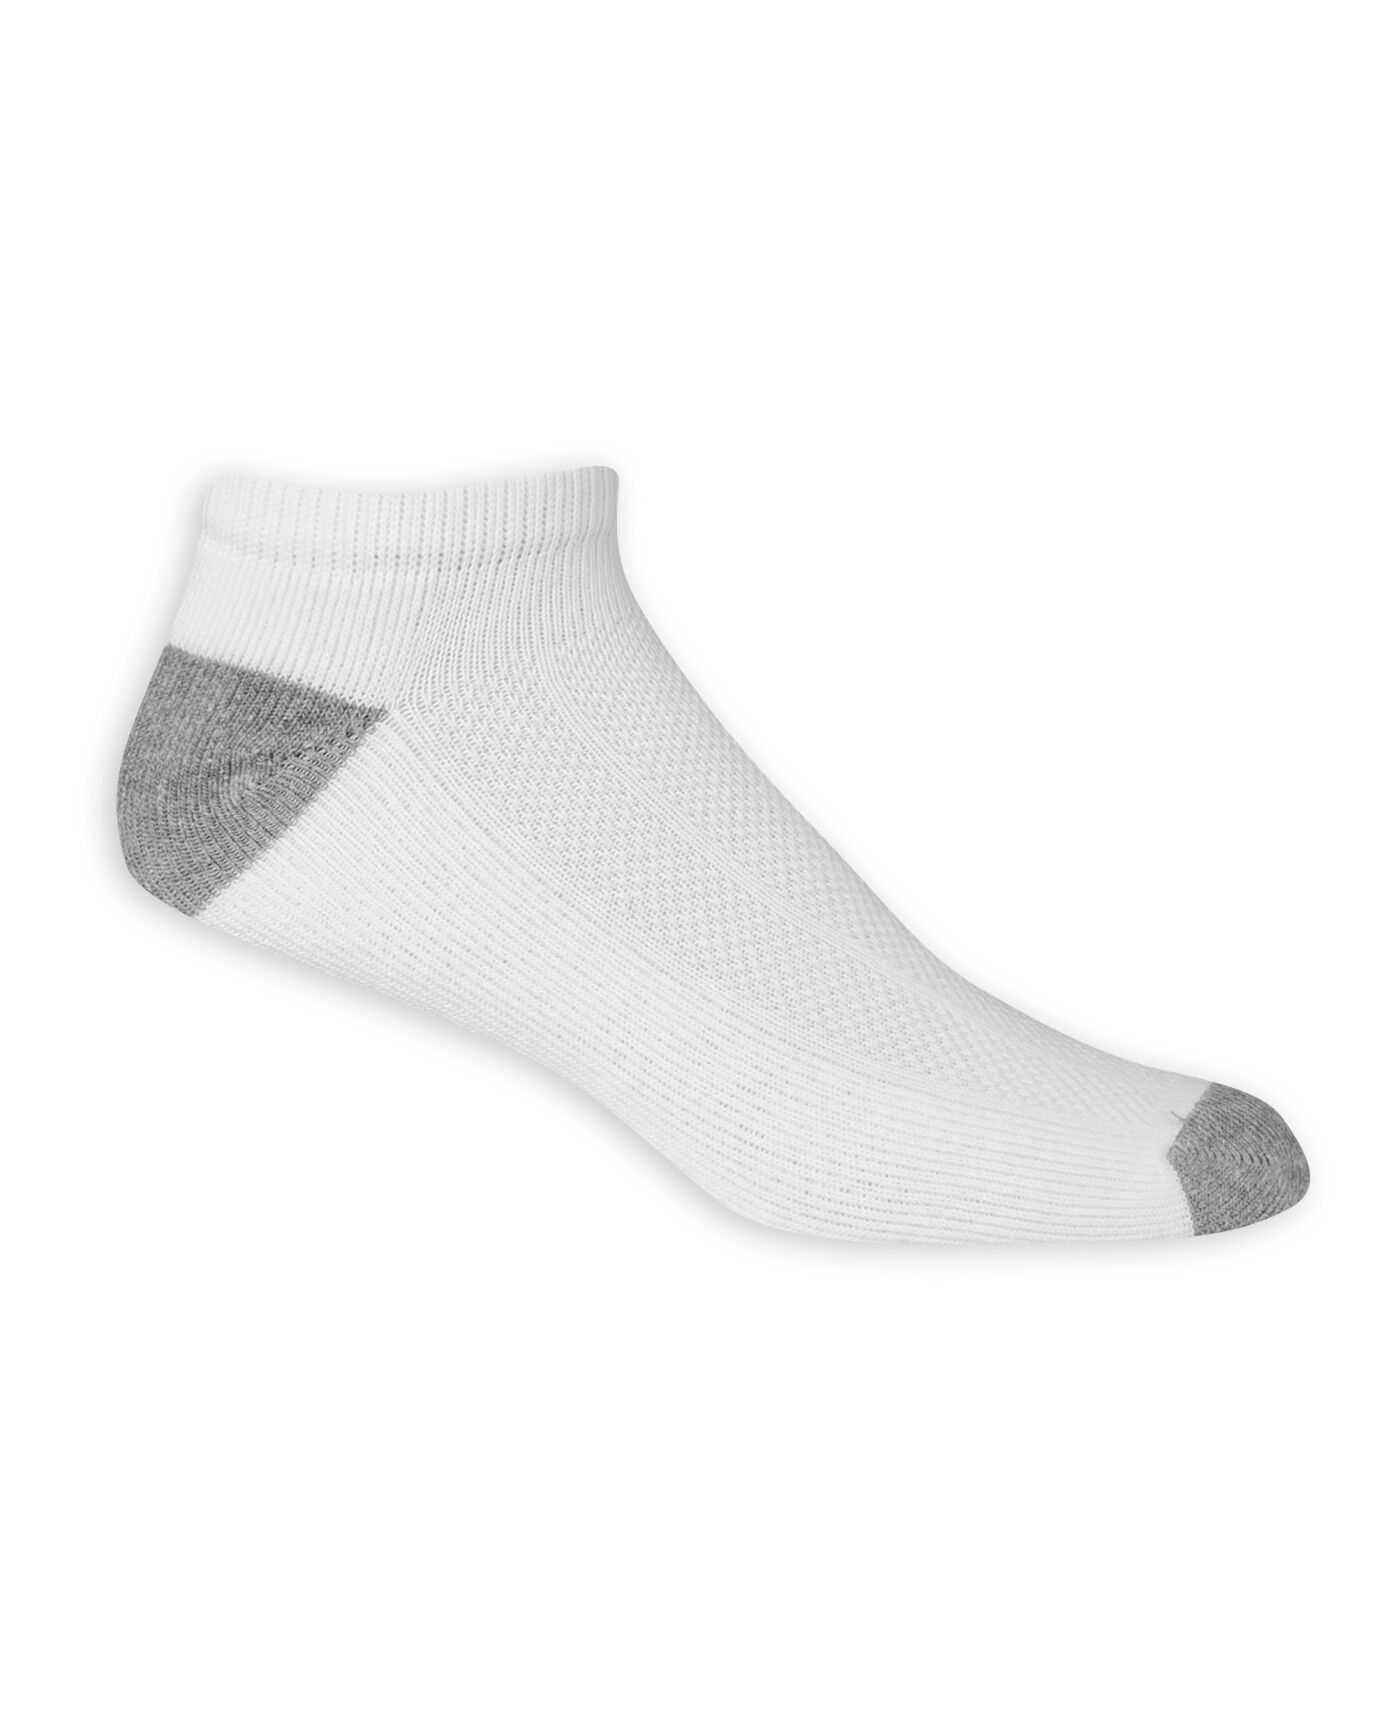 Men's Breathable Cotton No Show Socks, 6 Pack